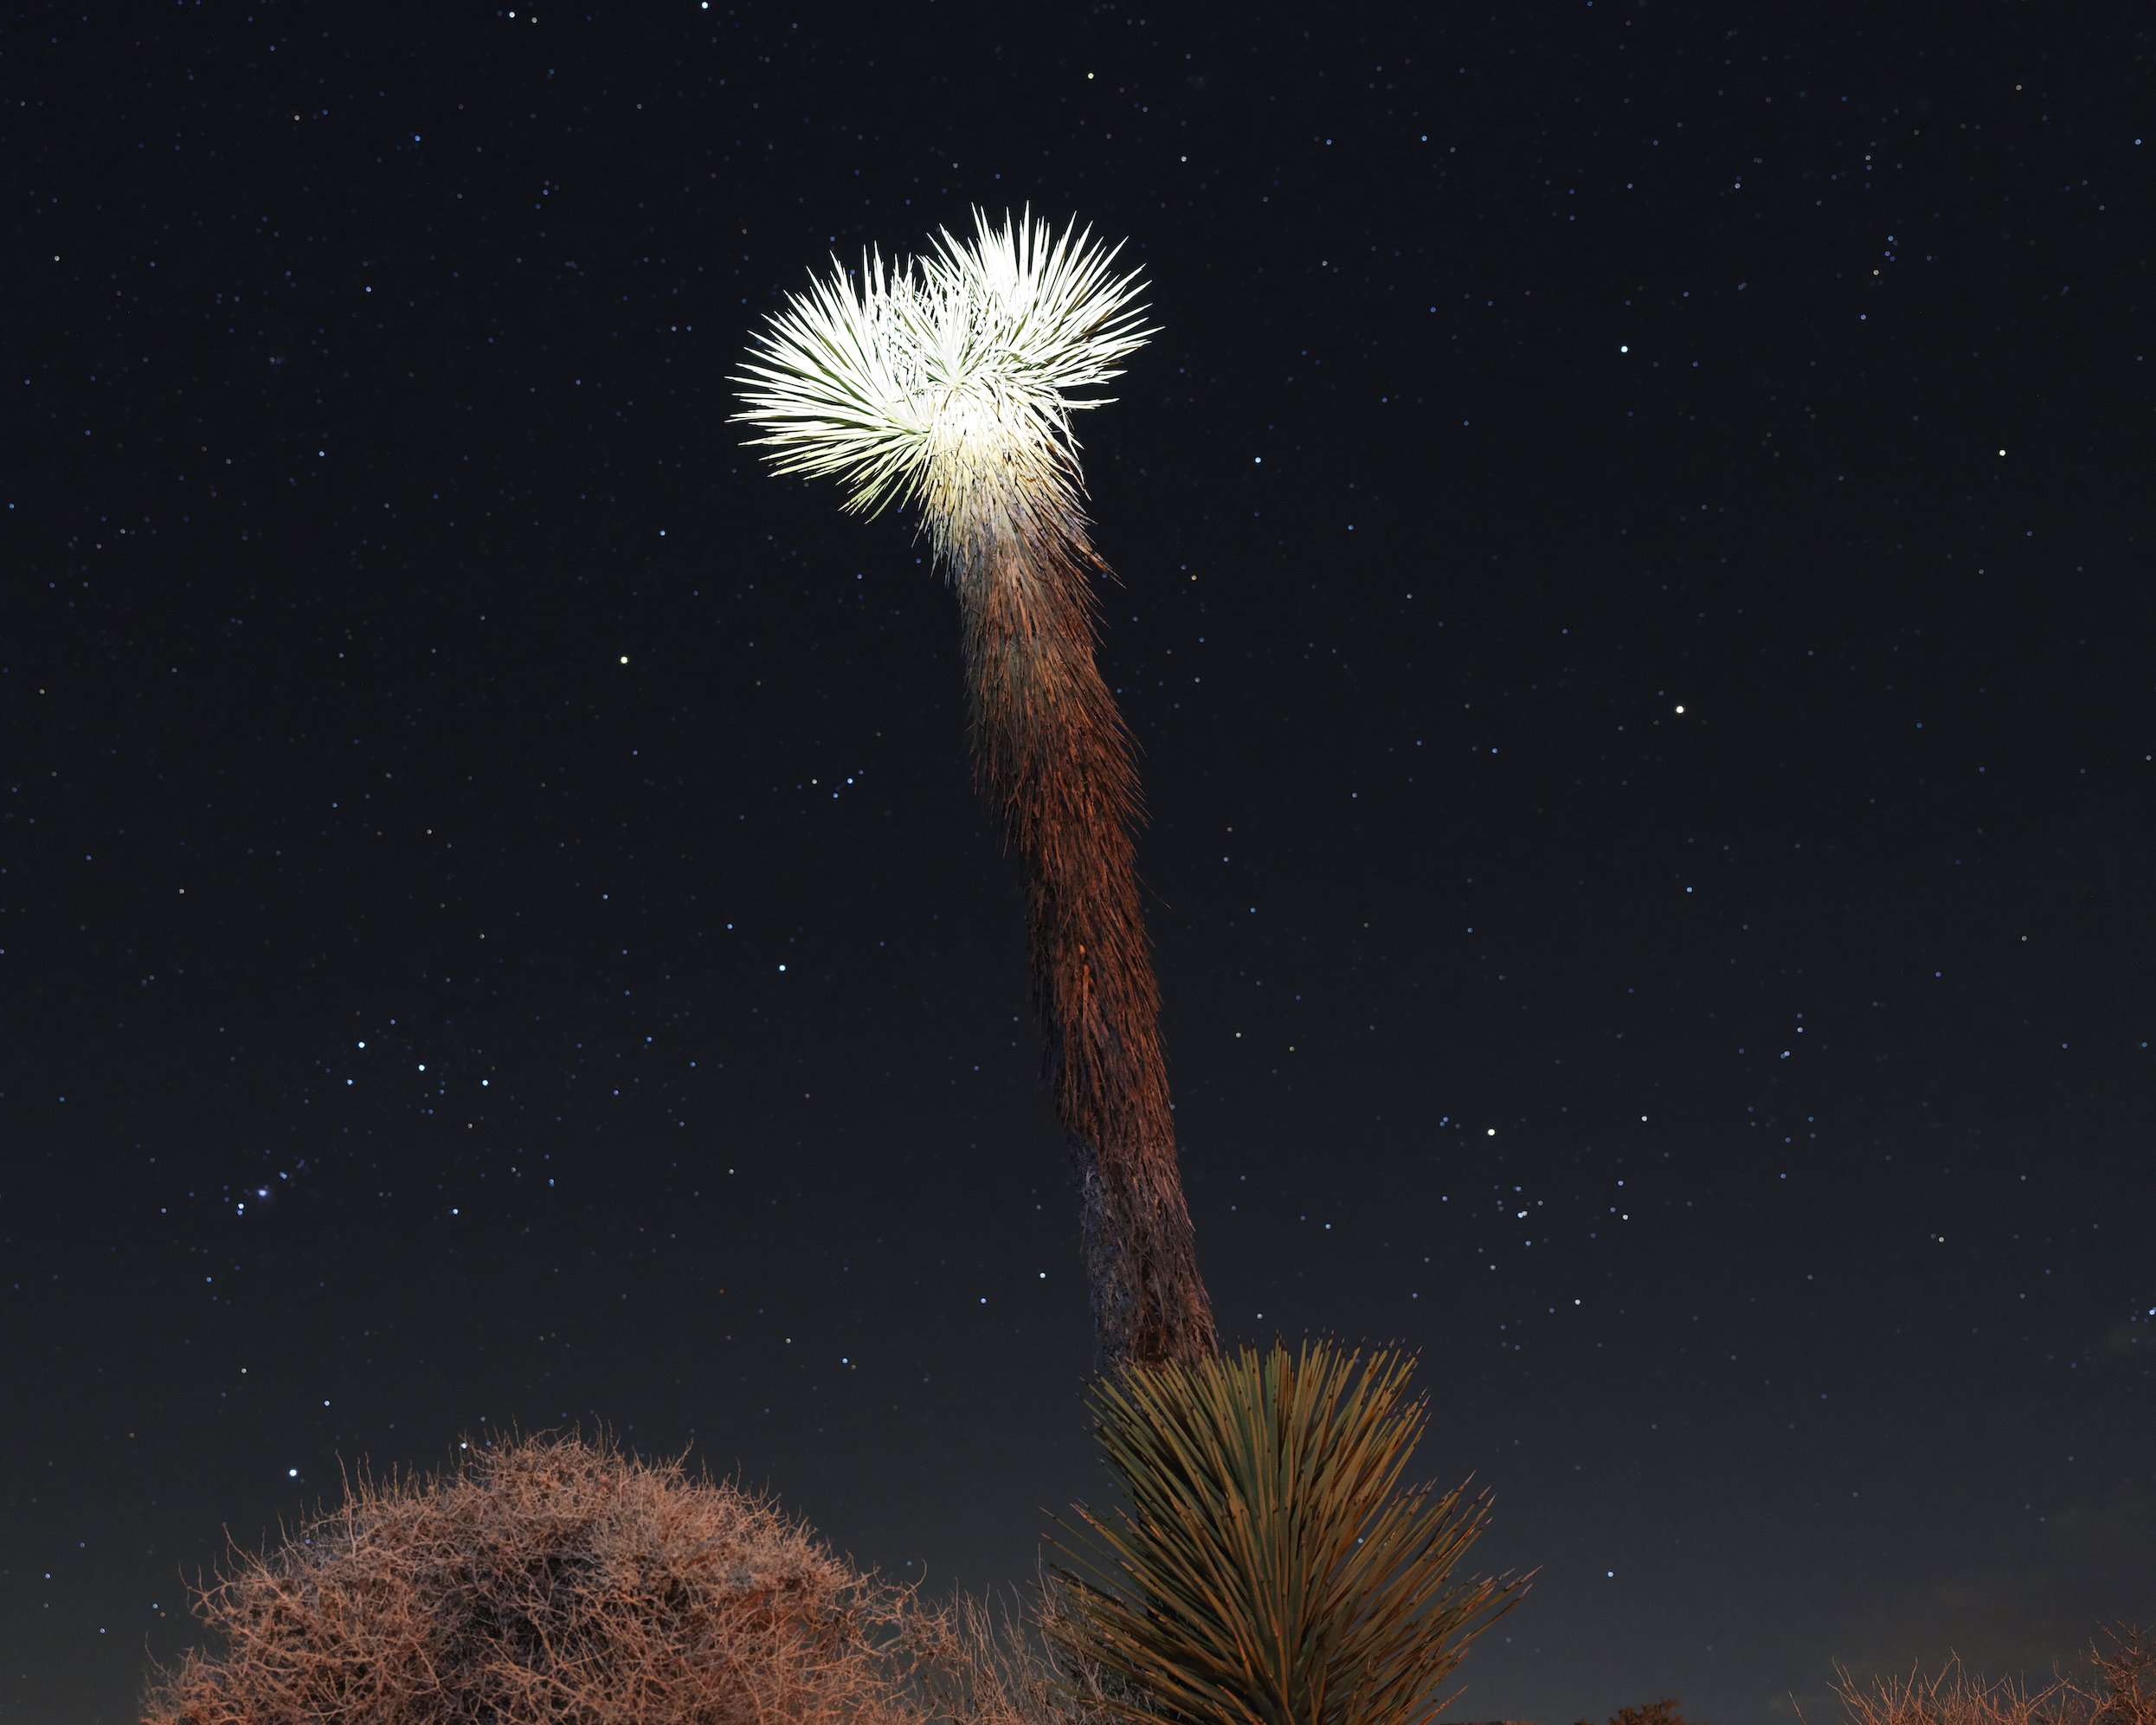 A Cactus Tree Lit Up.jpg